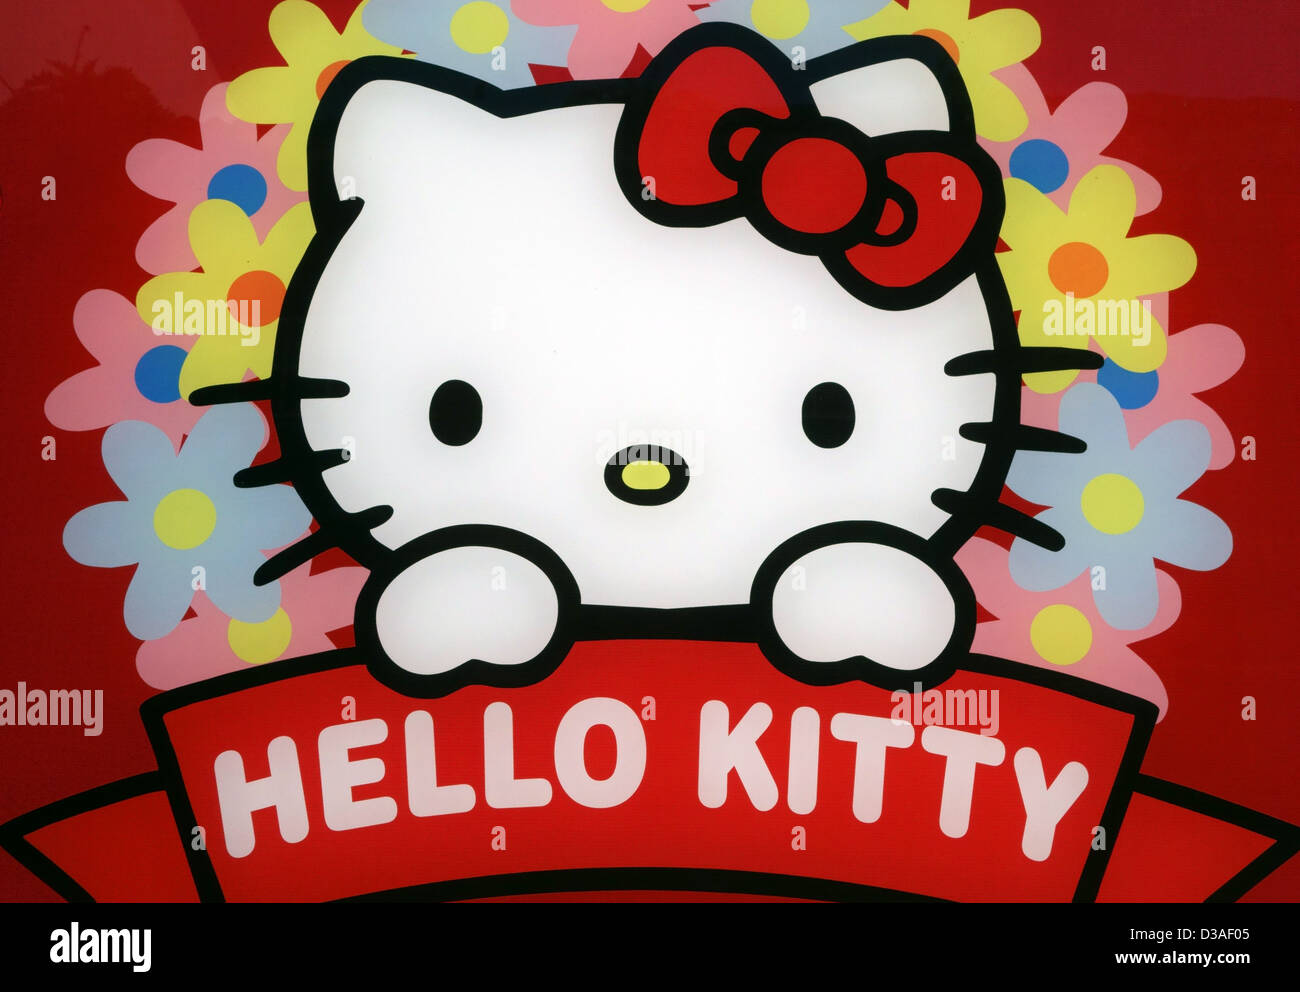 [15-in-1] Hello Kitty Island Stationery Set : Ribbon